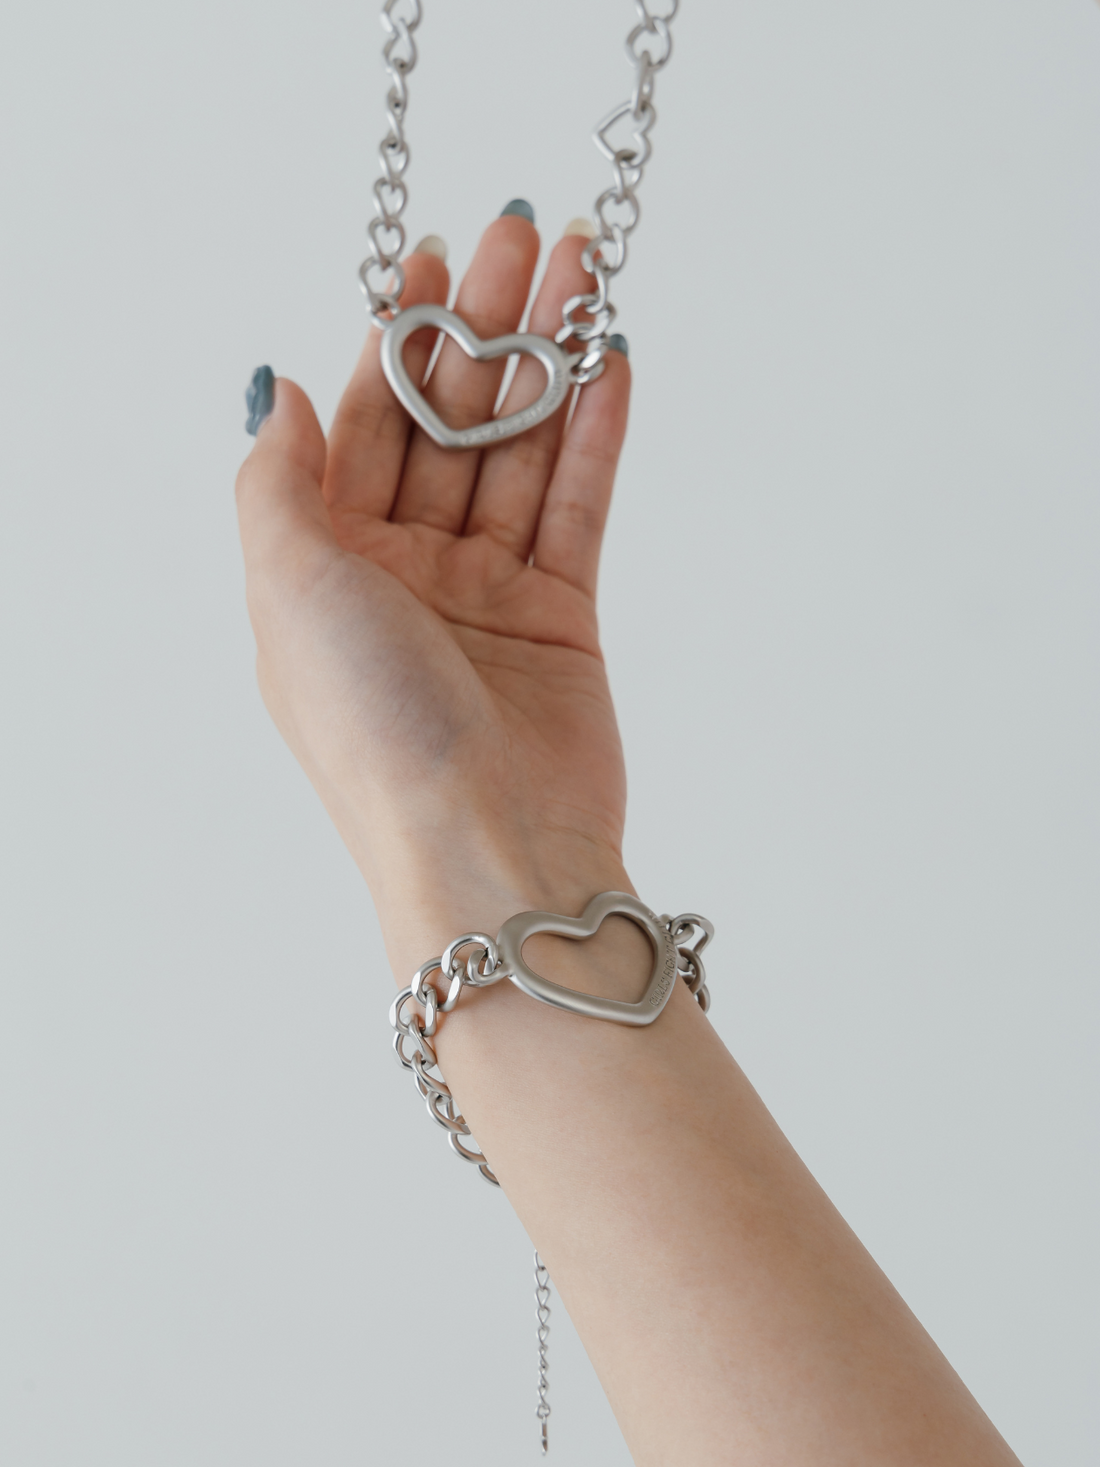 Heart chain bracelet